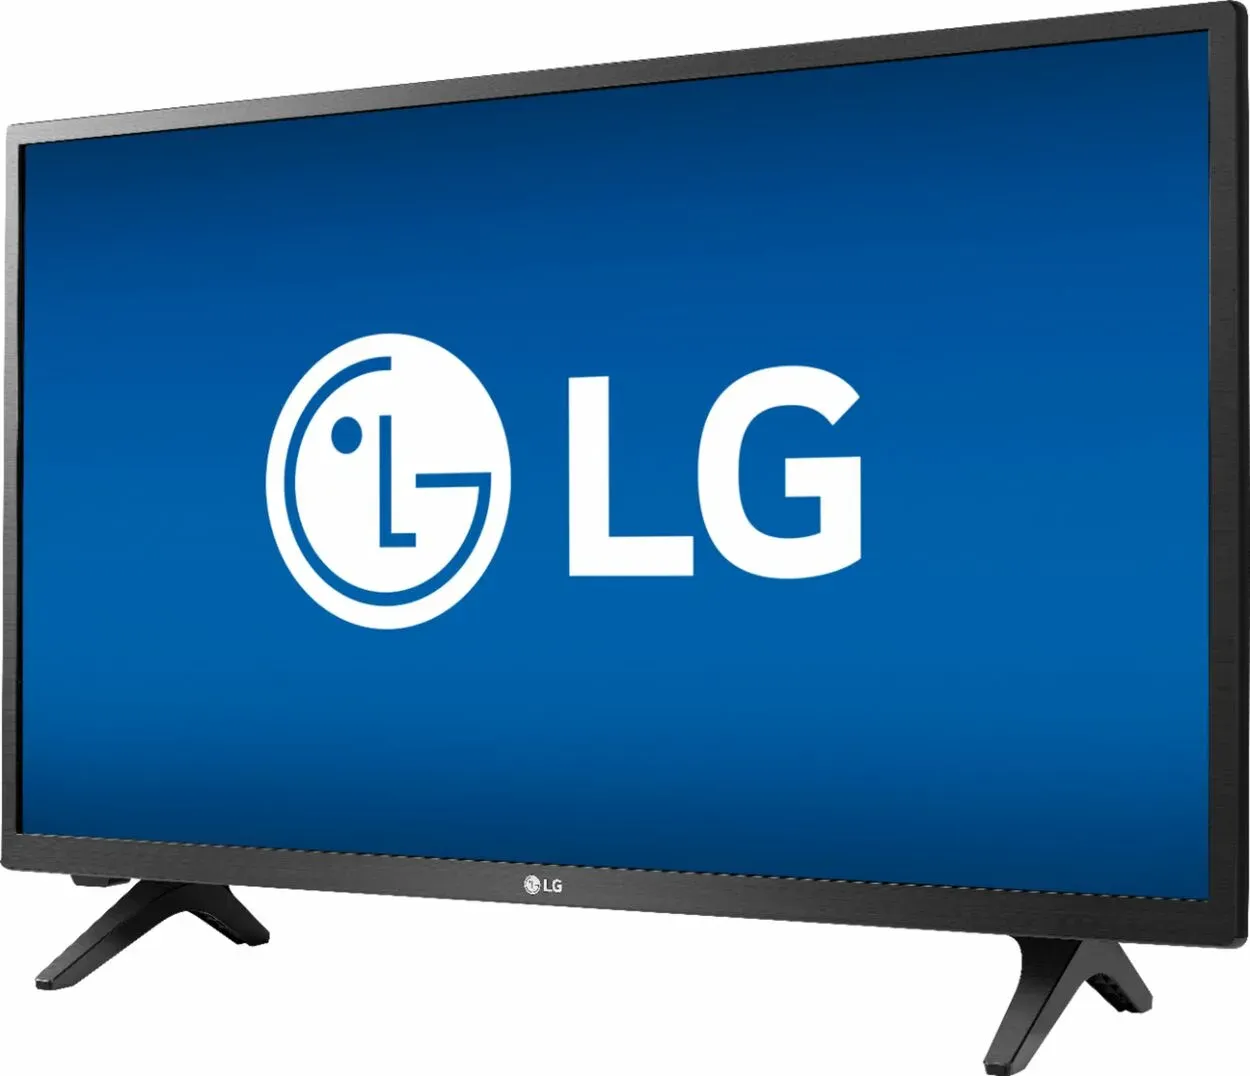 LG TV image.